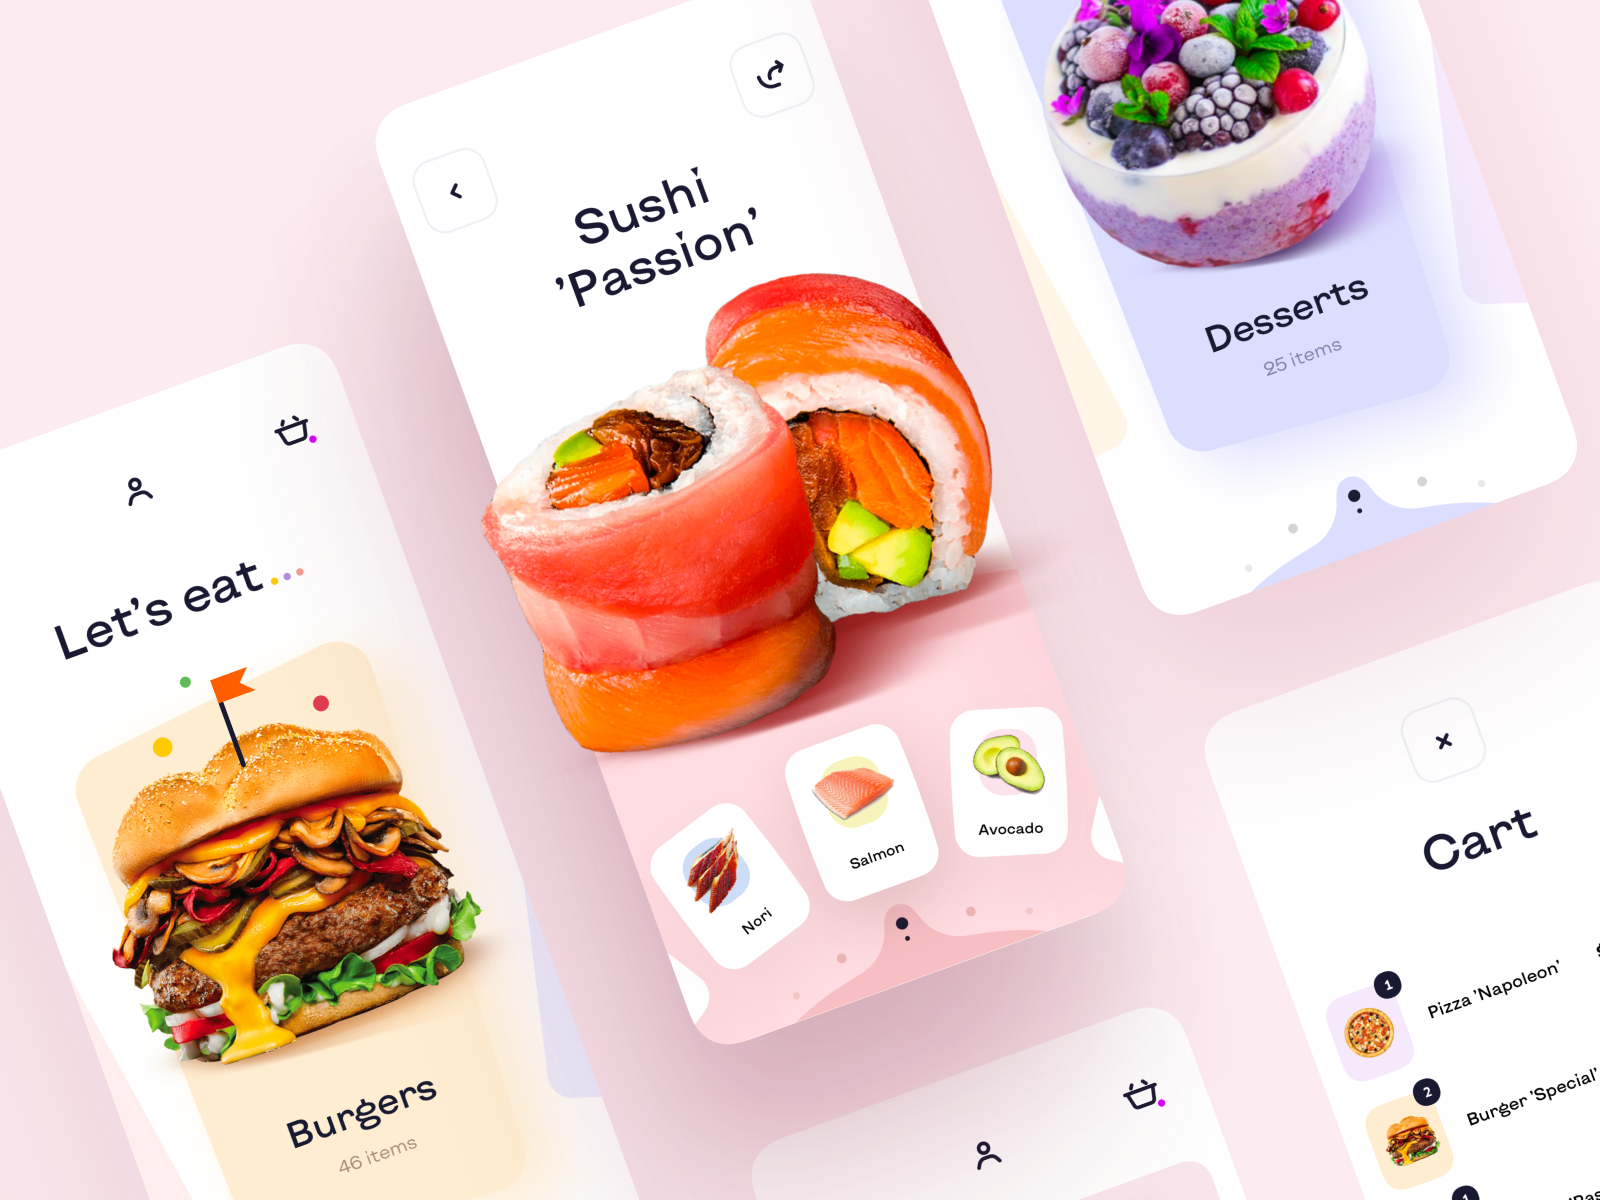 Food Order - Mobile App